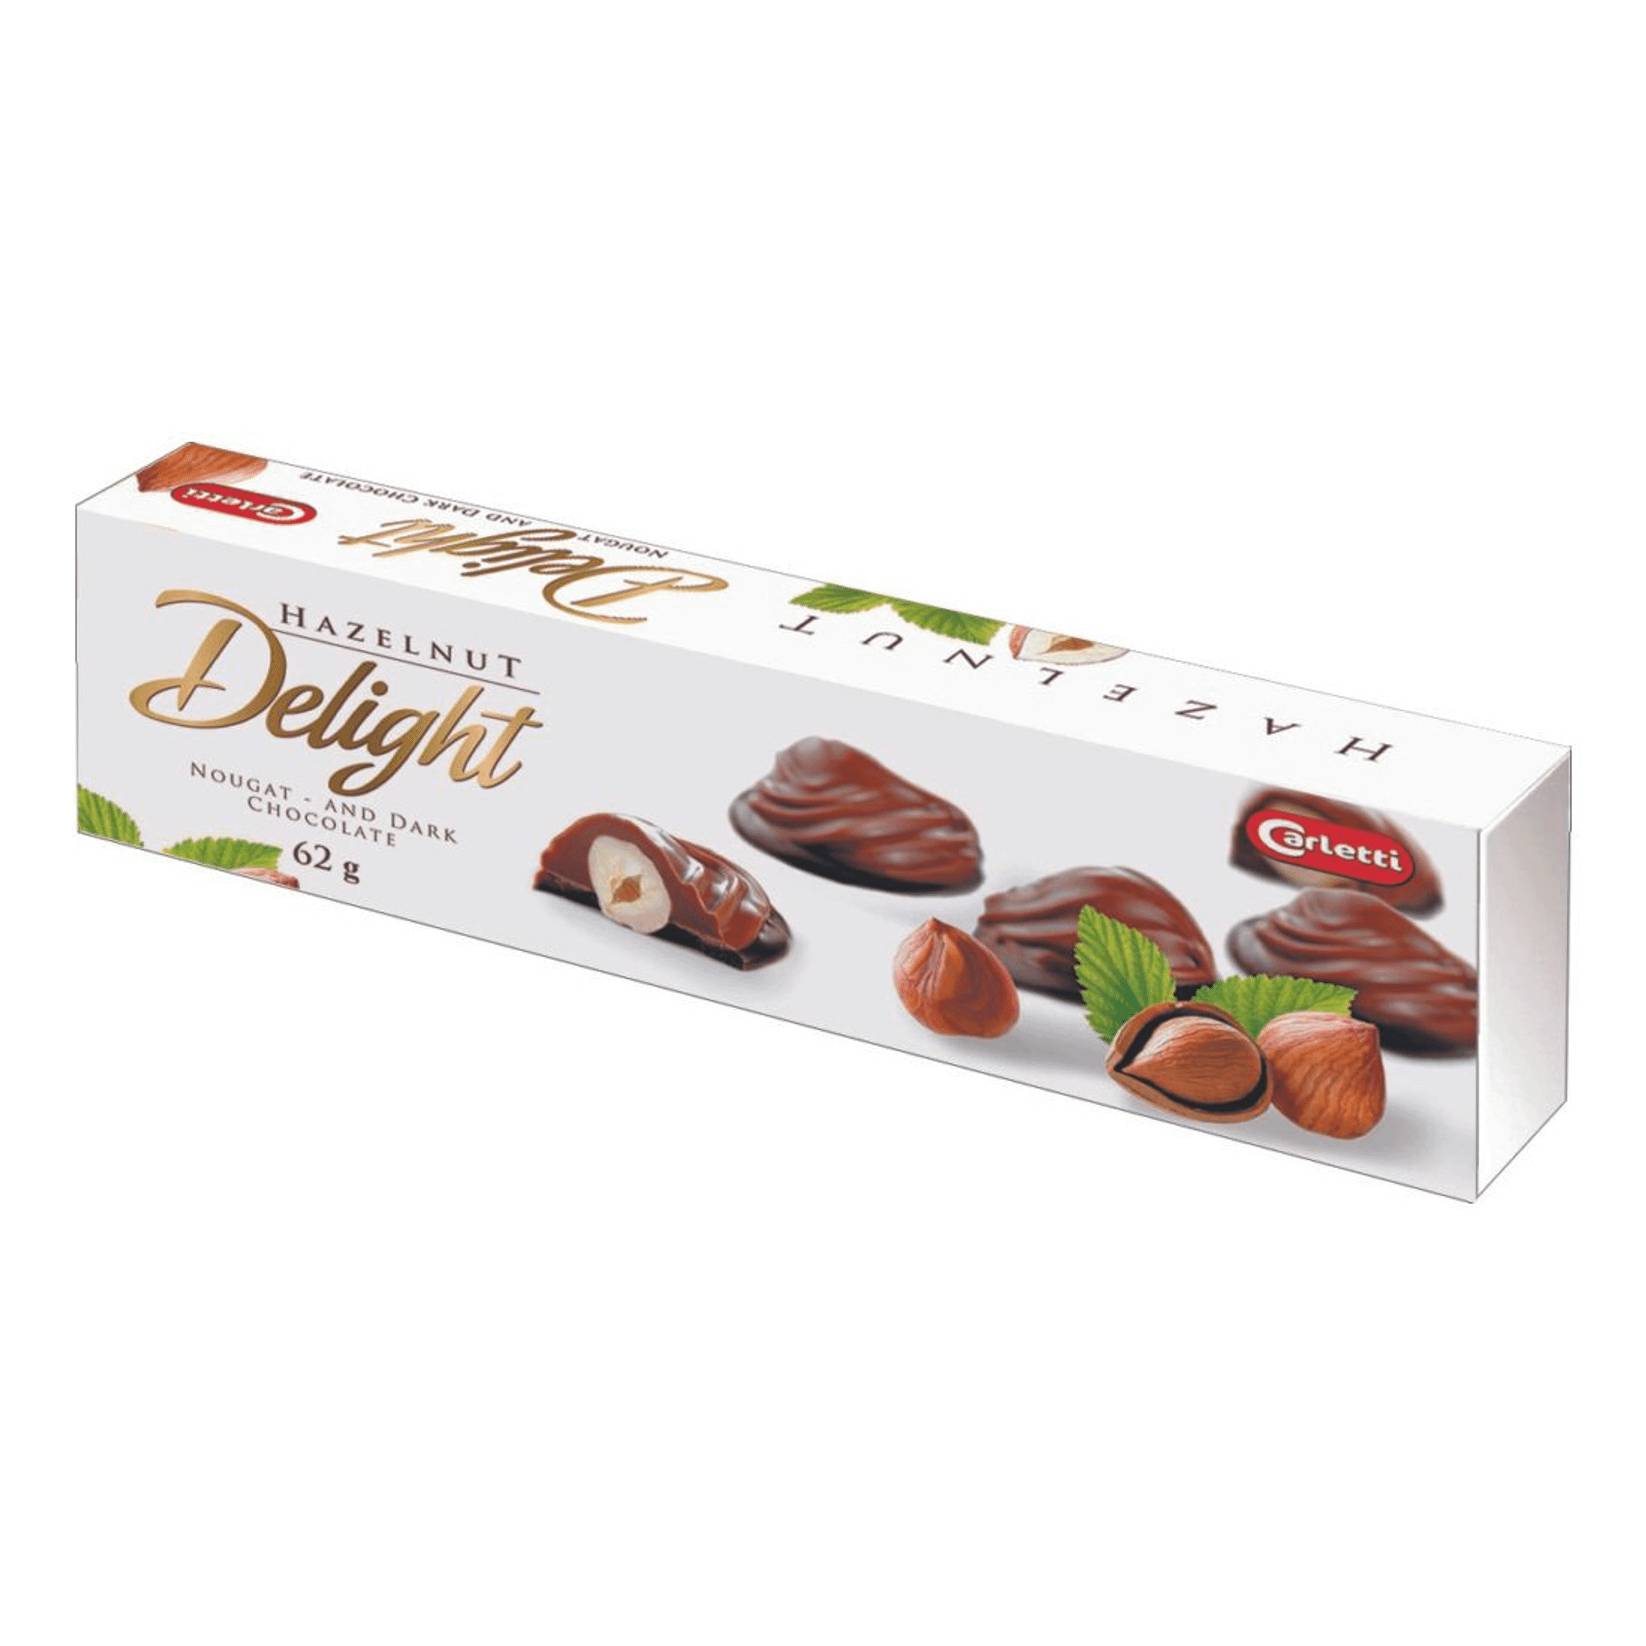 Набор шоколадный Carletti Hazelnut Delight, 62 г коробка складная под 8 конфет шоколад белая 17 7 х 17 8 х 3 8 см